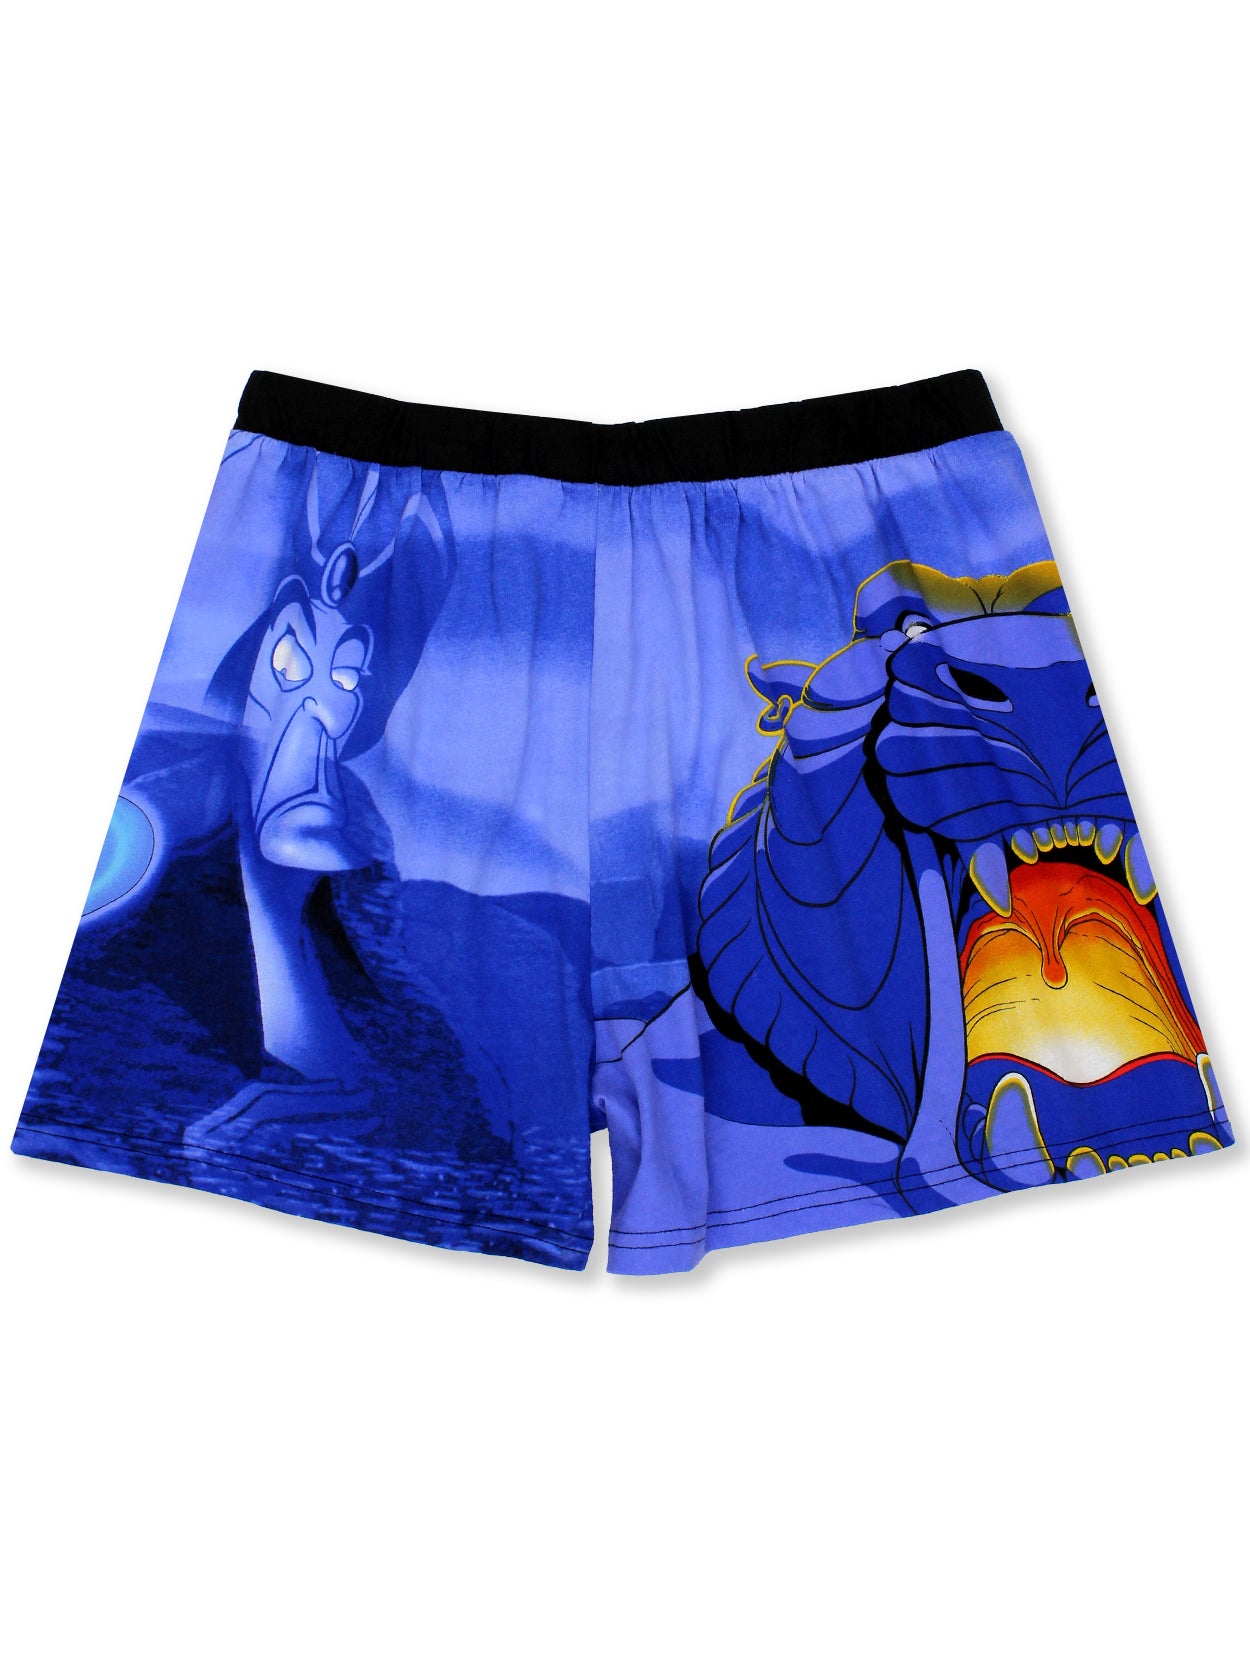 Disney Aladdin Genie Crazy Boxer Briefs Underwear Blue Mens Size Small